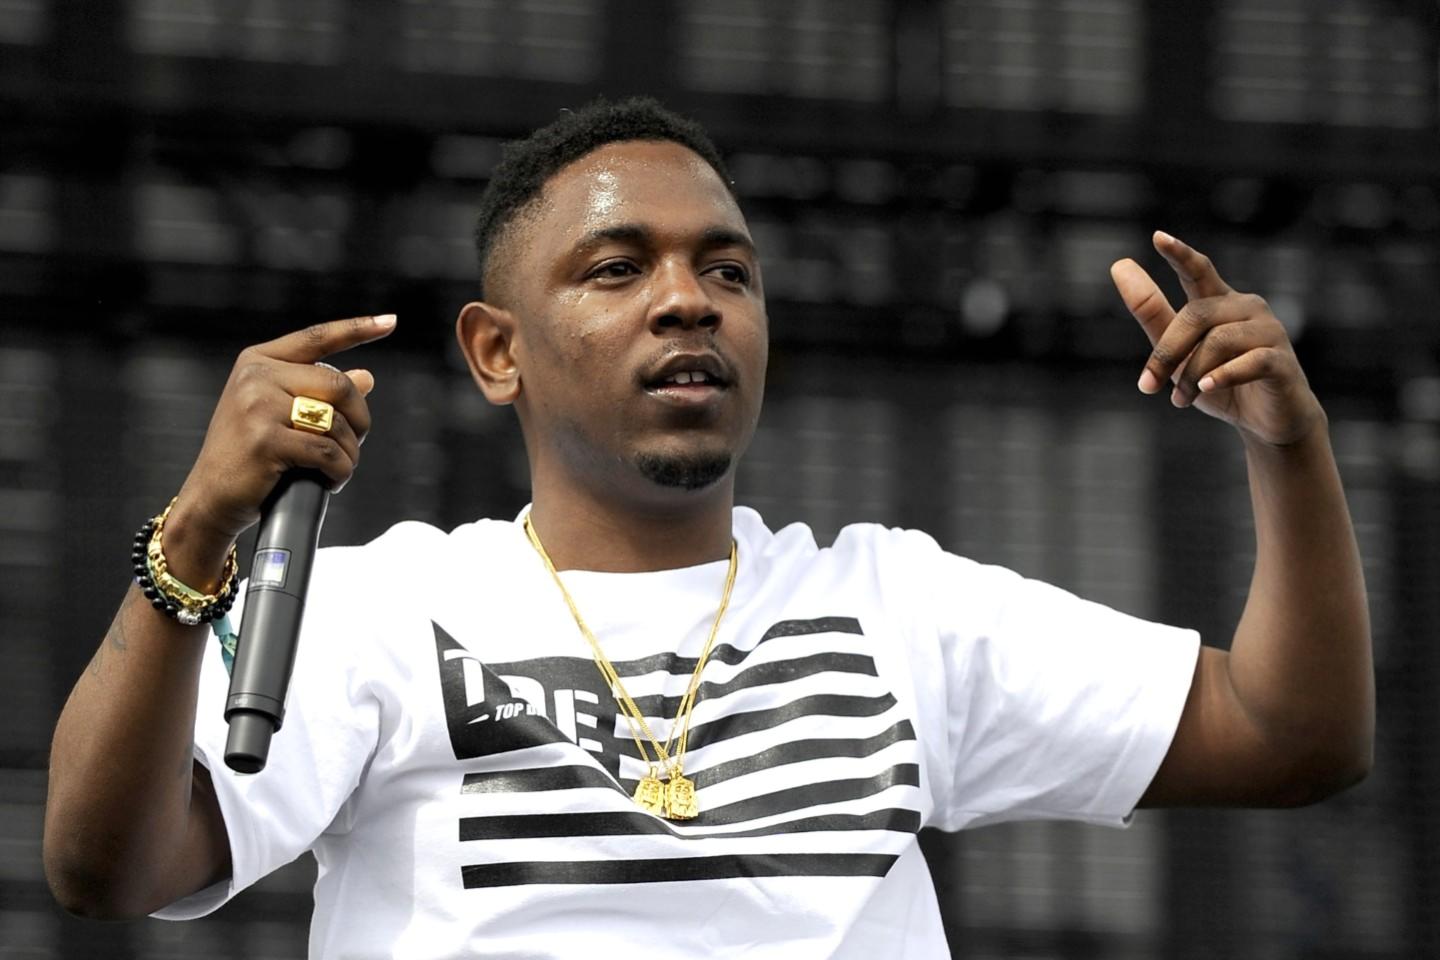 Kendrick Lamar Tickets | Kendrick Lamar Tour 2019 and Concert Tickets - viagogo1440 x 960